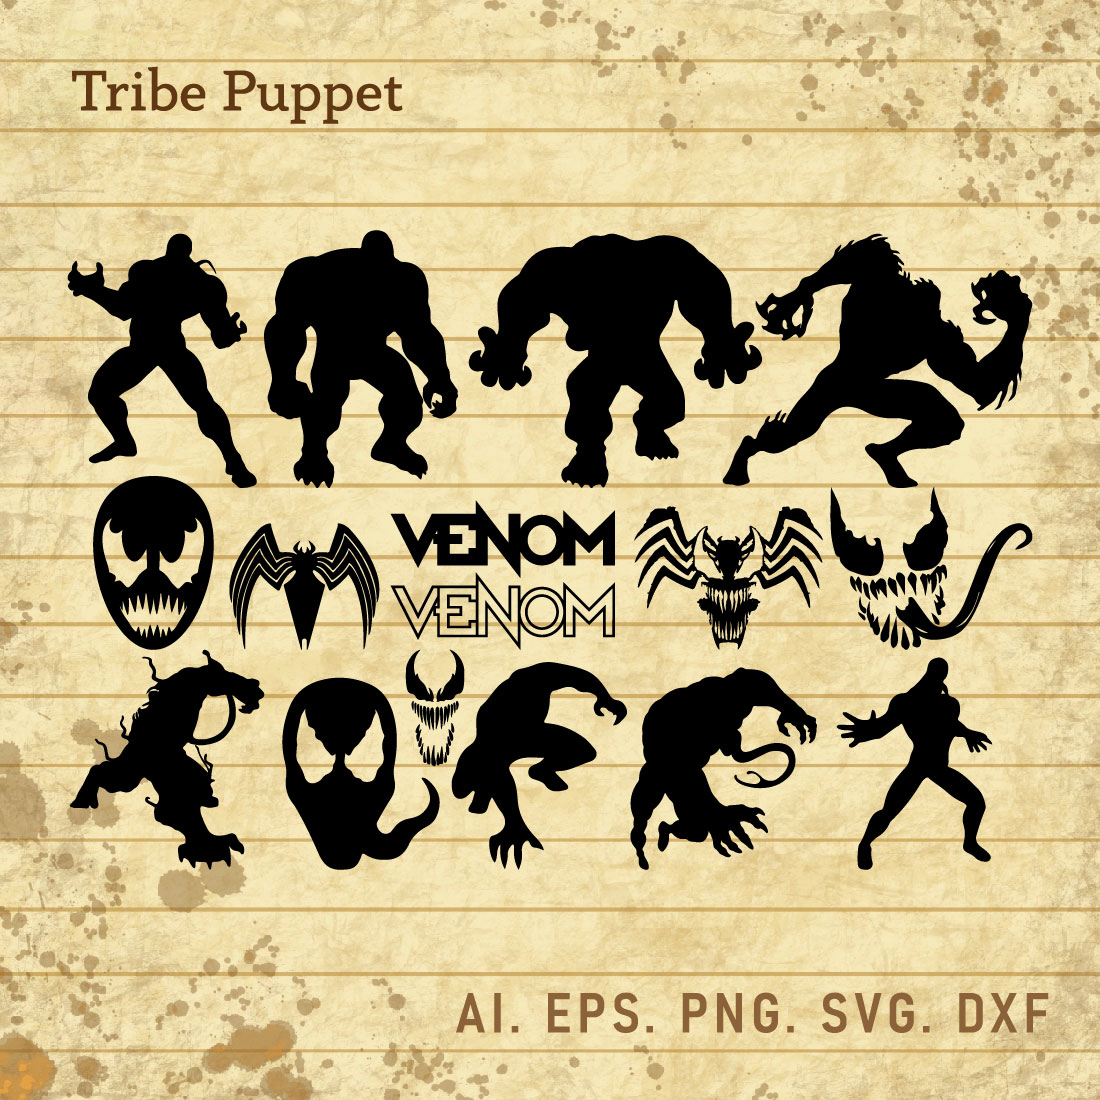 Venom SVG cover image.